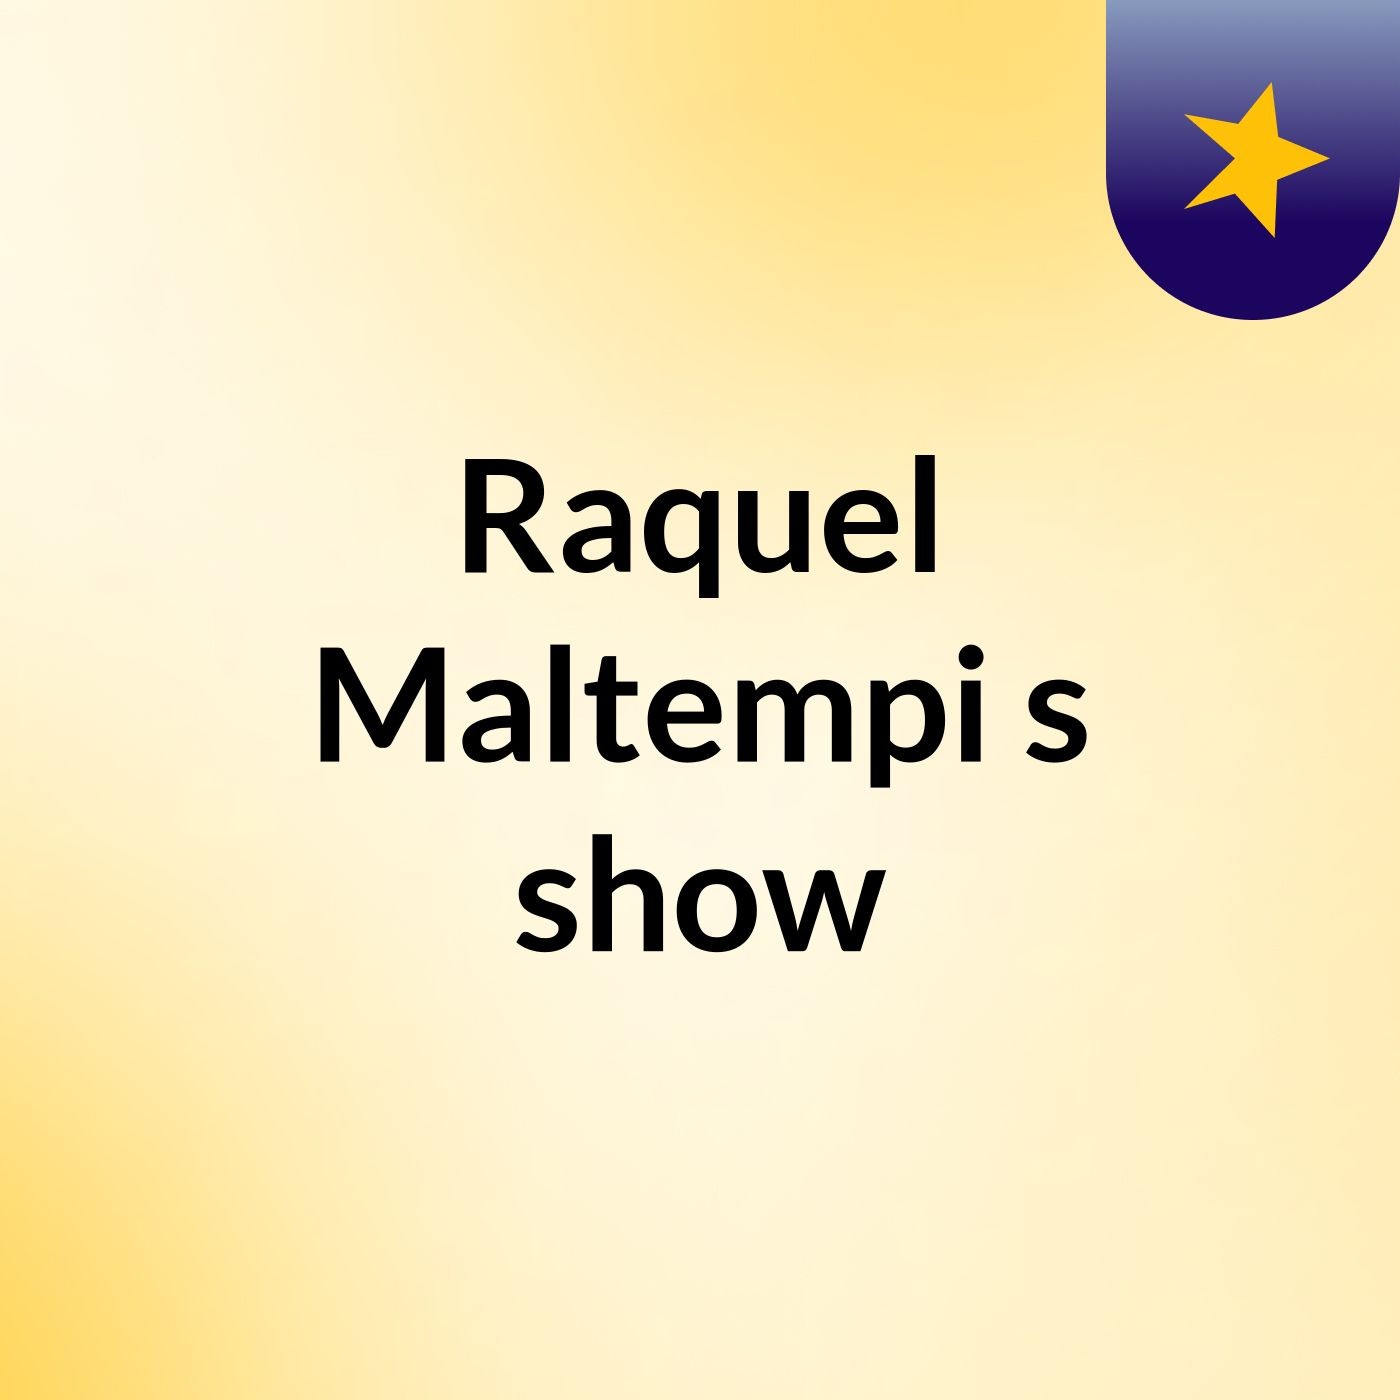 Raquel Maltempi's show